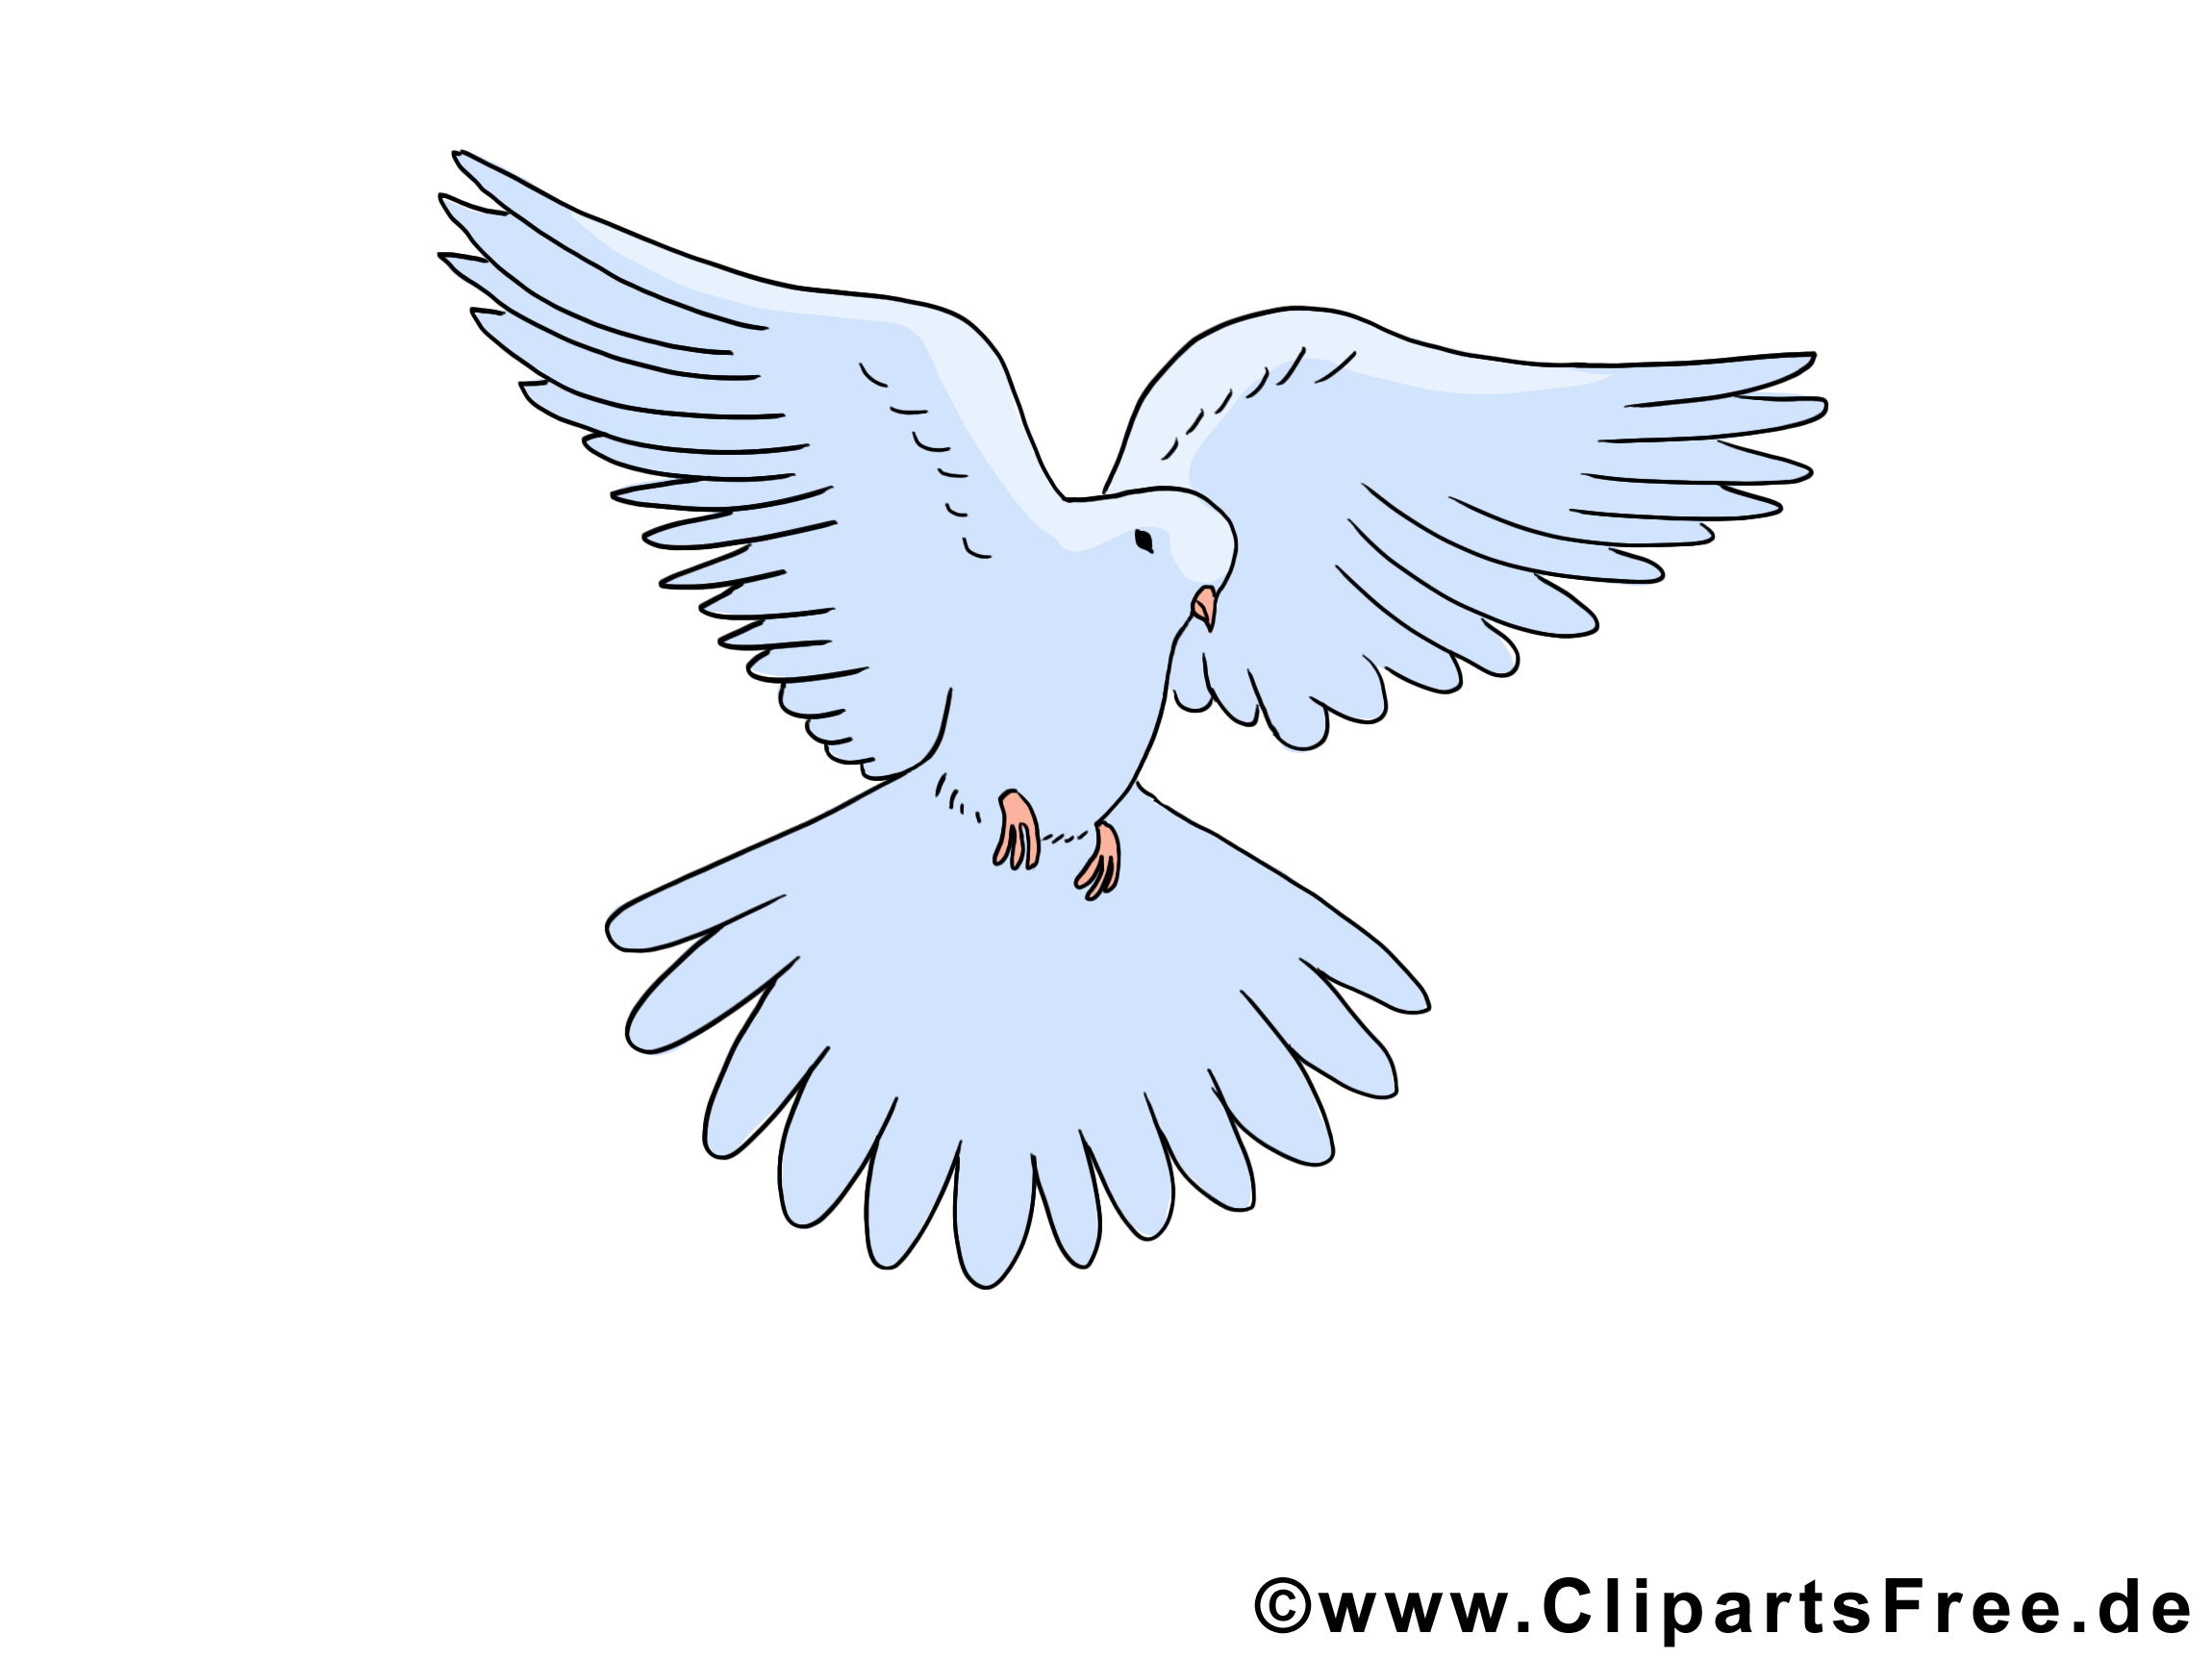 clipart gratuit colombe - photo #36